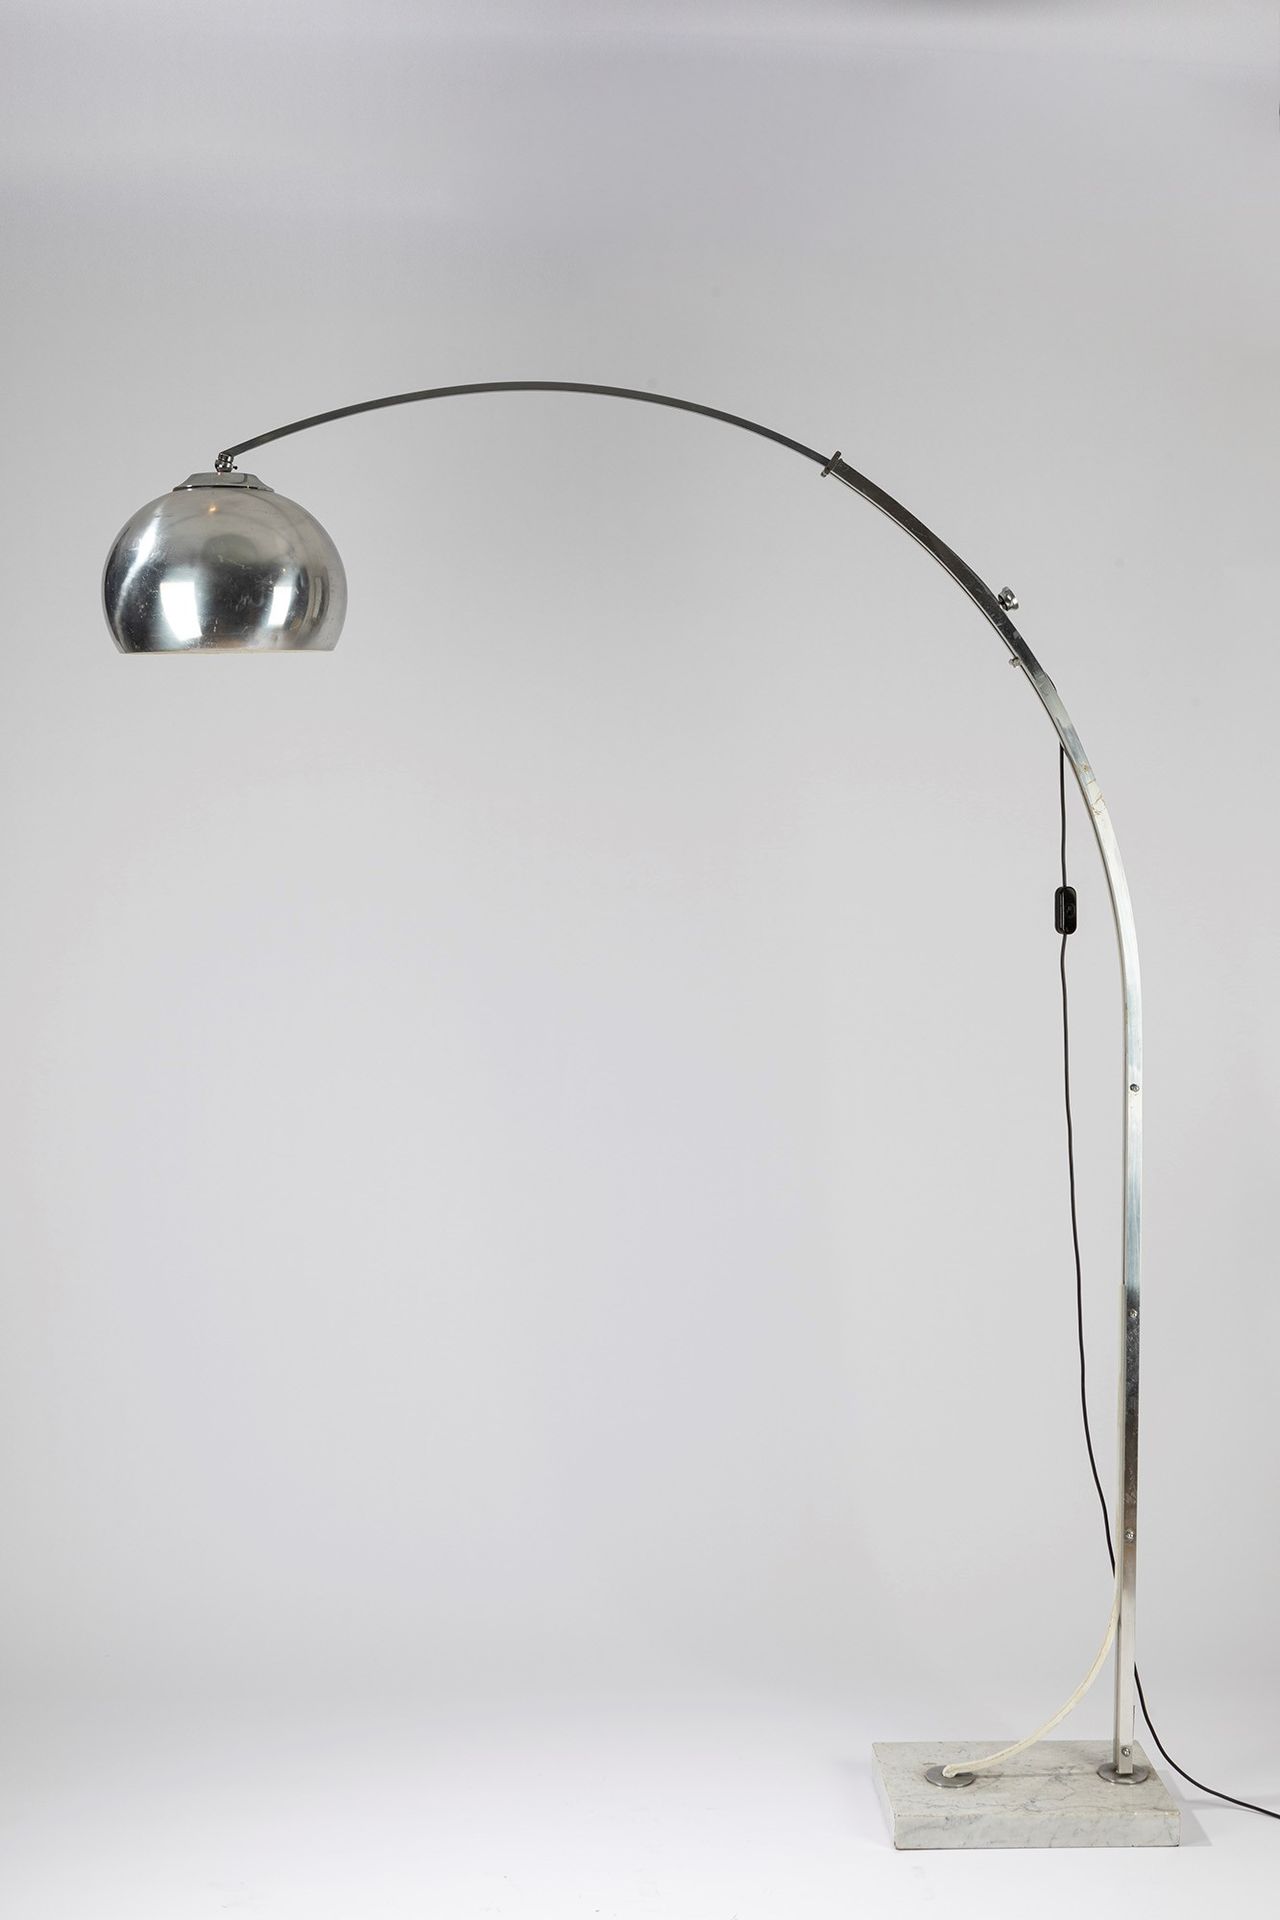 ITALIAN MANUFACTURE Floor lamp, 70's period

cm 140 x 29 x 202 H
with metal stem&hellip;